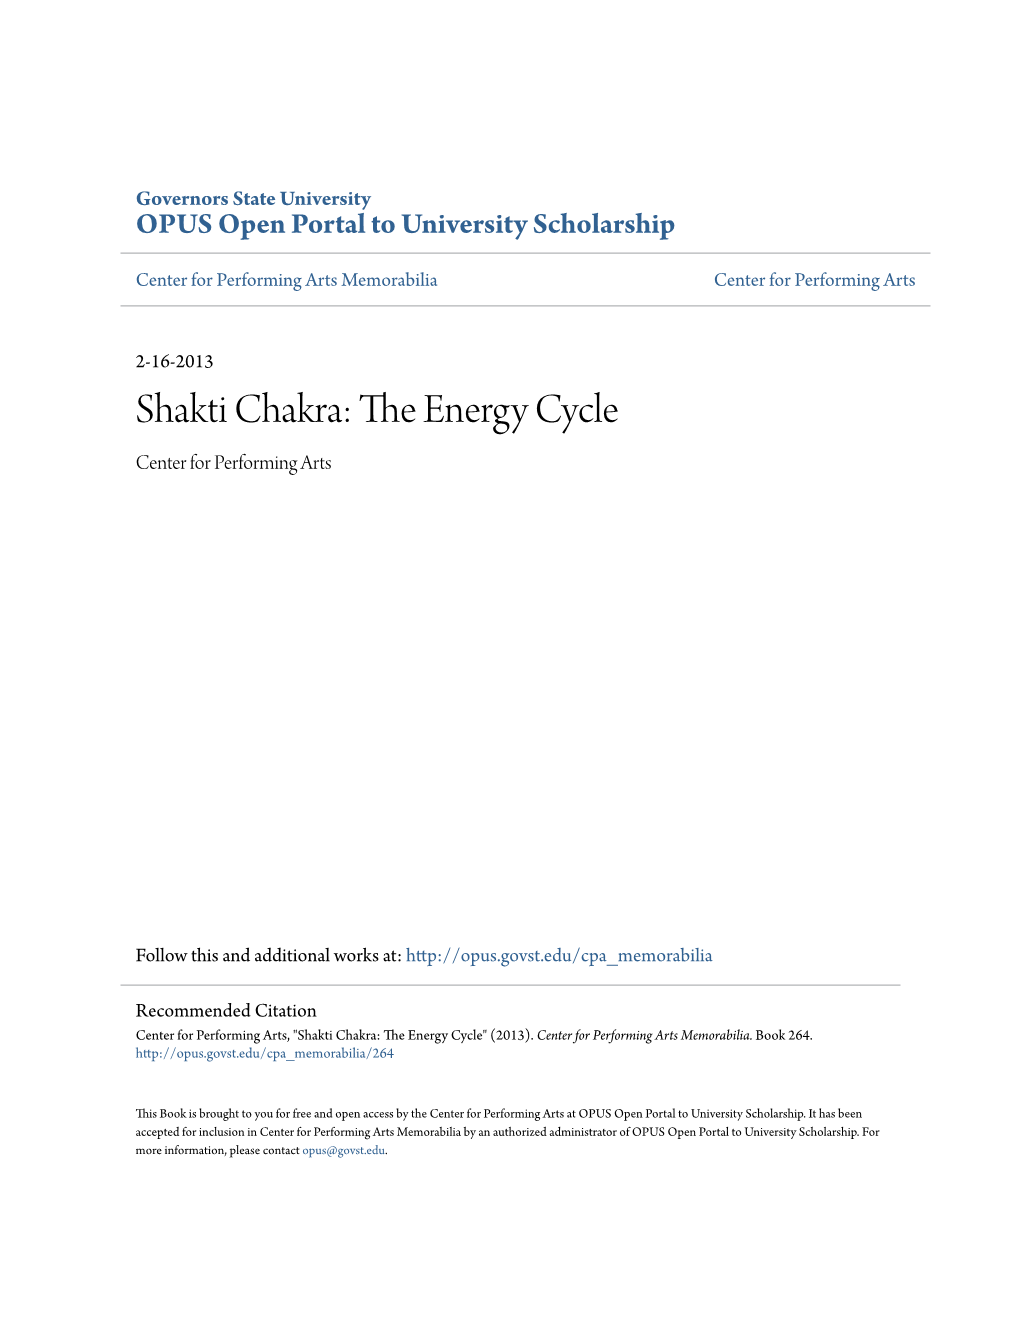 Shakti Chakra: the Energy Cycle